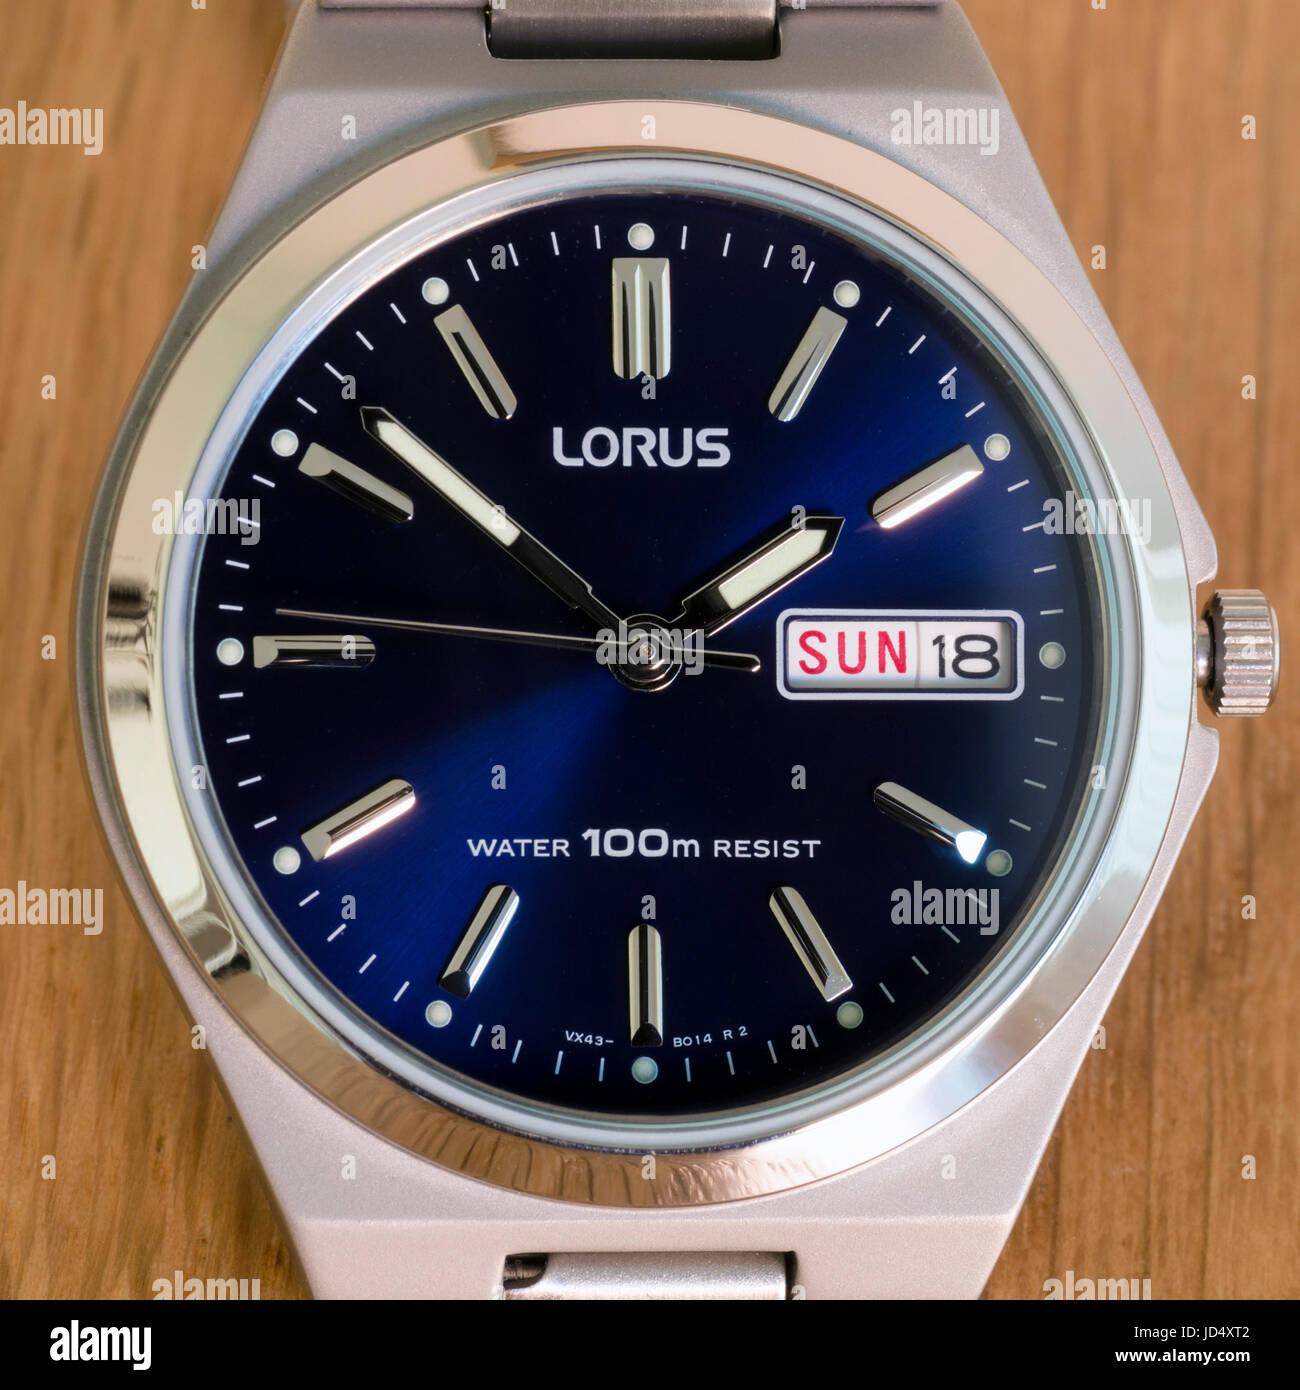 Hombre de Lorus reloj analógico, reloj con cara de azul profundo